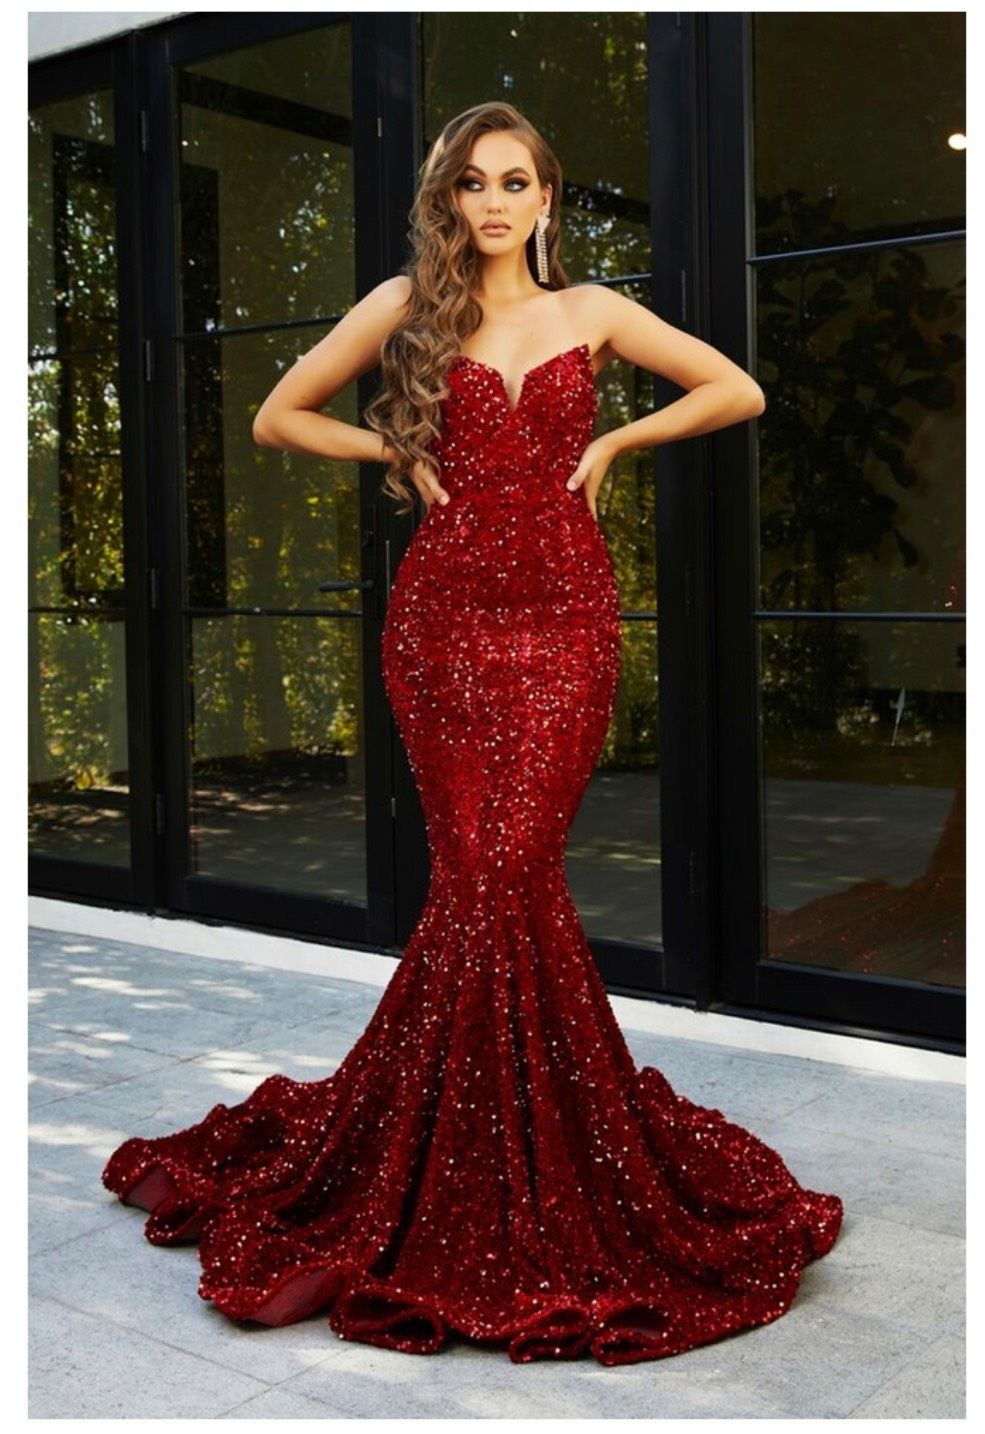 Primavera Couture 3792 Red Prom Dress Size 000, 0, 4 Strappy Back Sequin